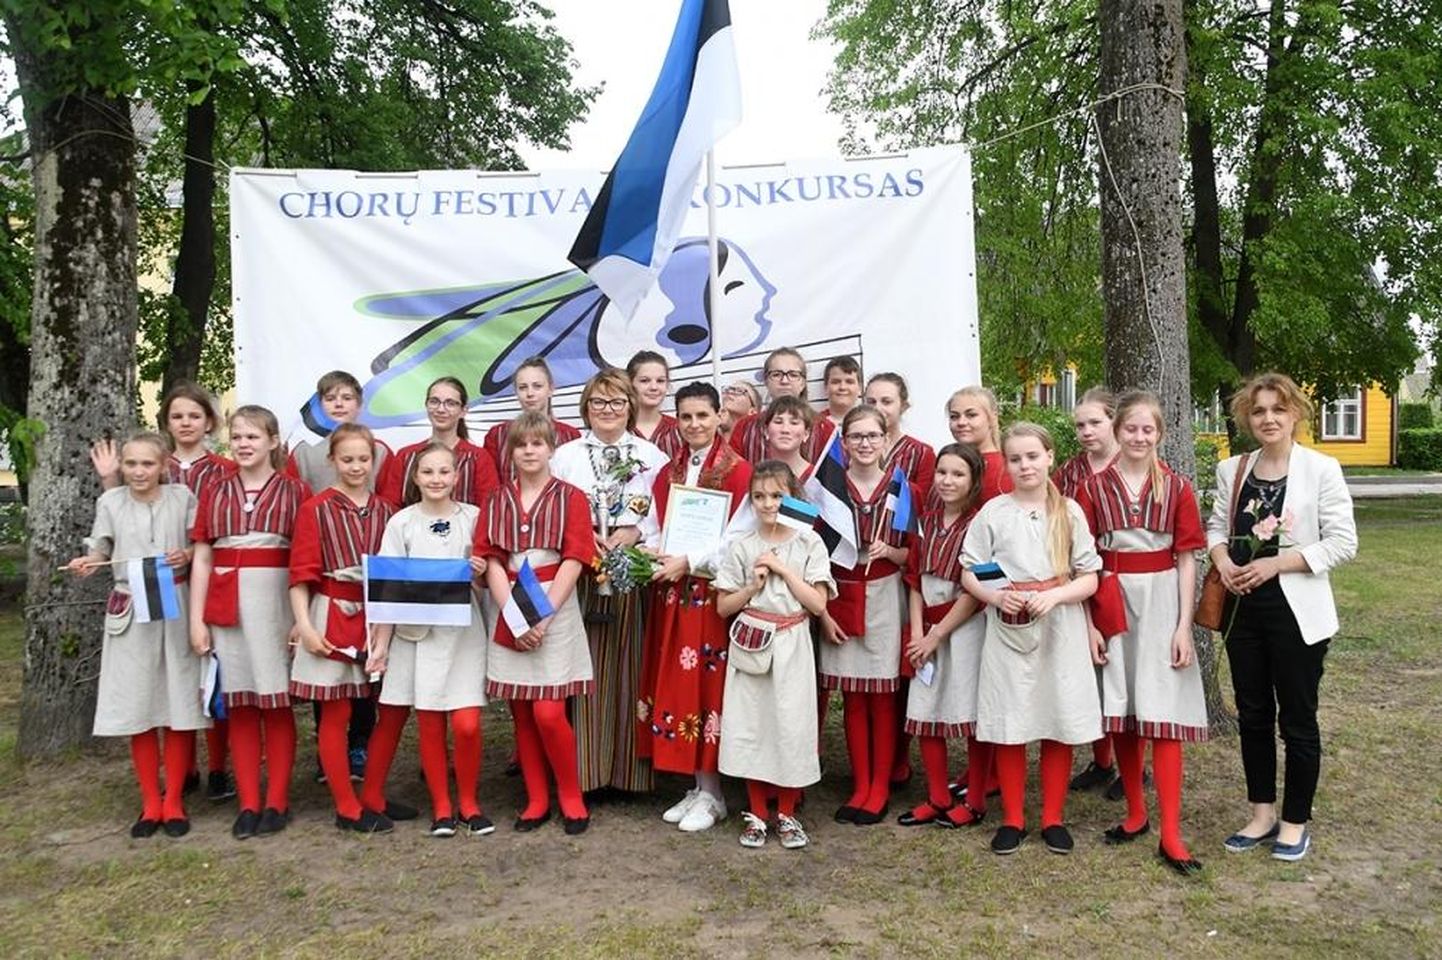 Tapa Valla Lastekoor hoidis Leedus Eesti muusikalippu kõrgel.